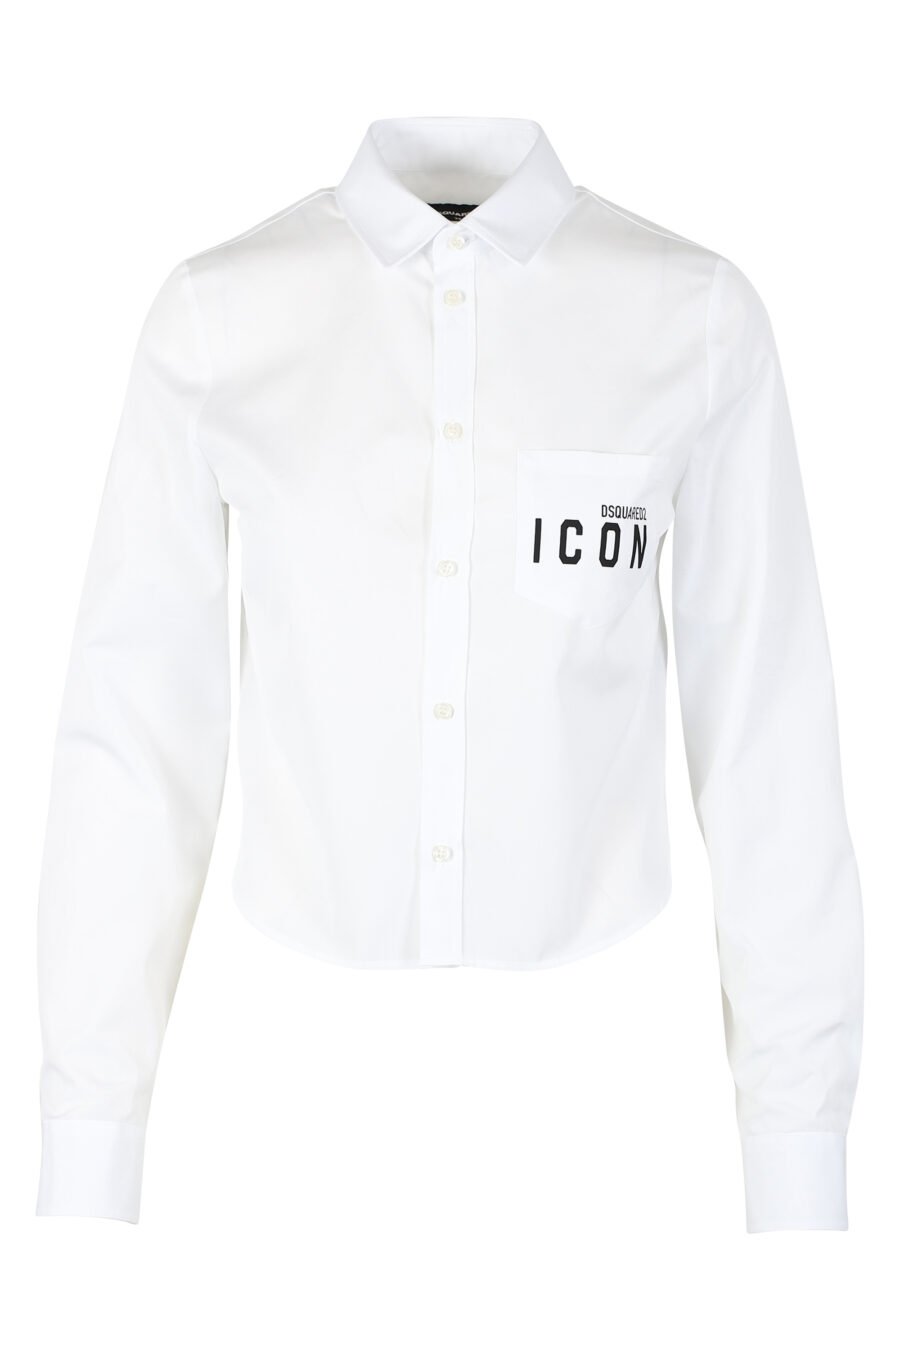 Camisa blanca corta con minilogo doble icon - IMG 9793